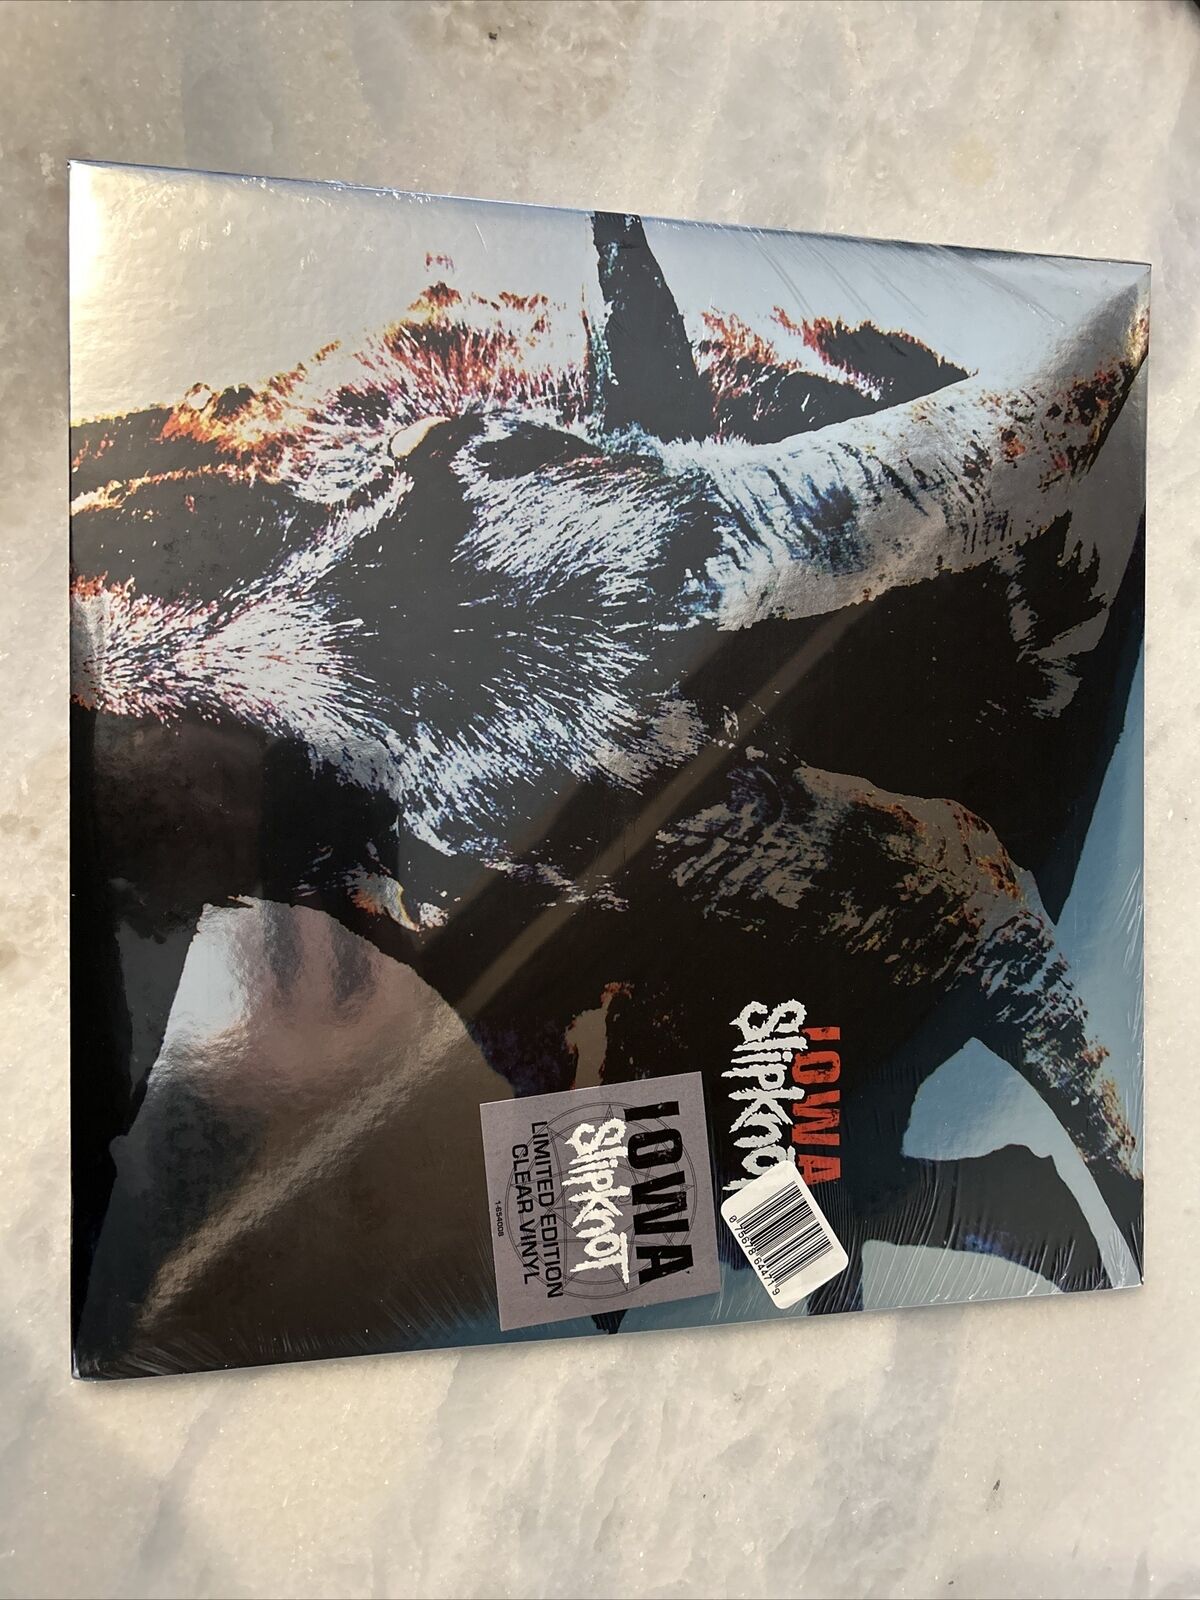 Slipknot - Iowa - ⚪️ CLEAR 2LP Vinyl Limited Edition - ✅ Ships UPS ✅